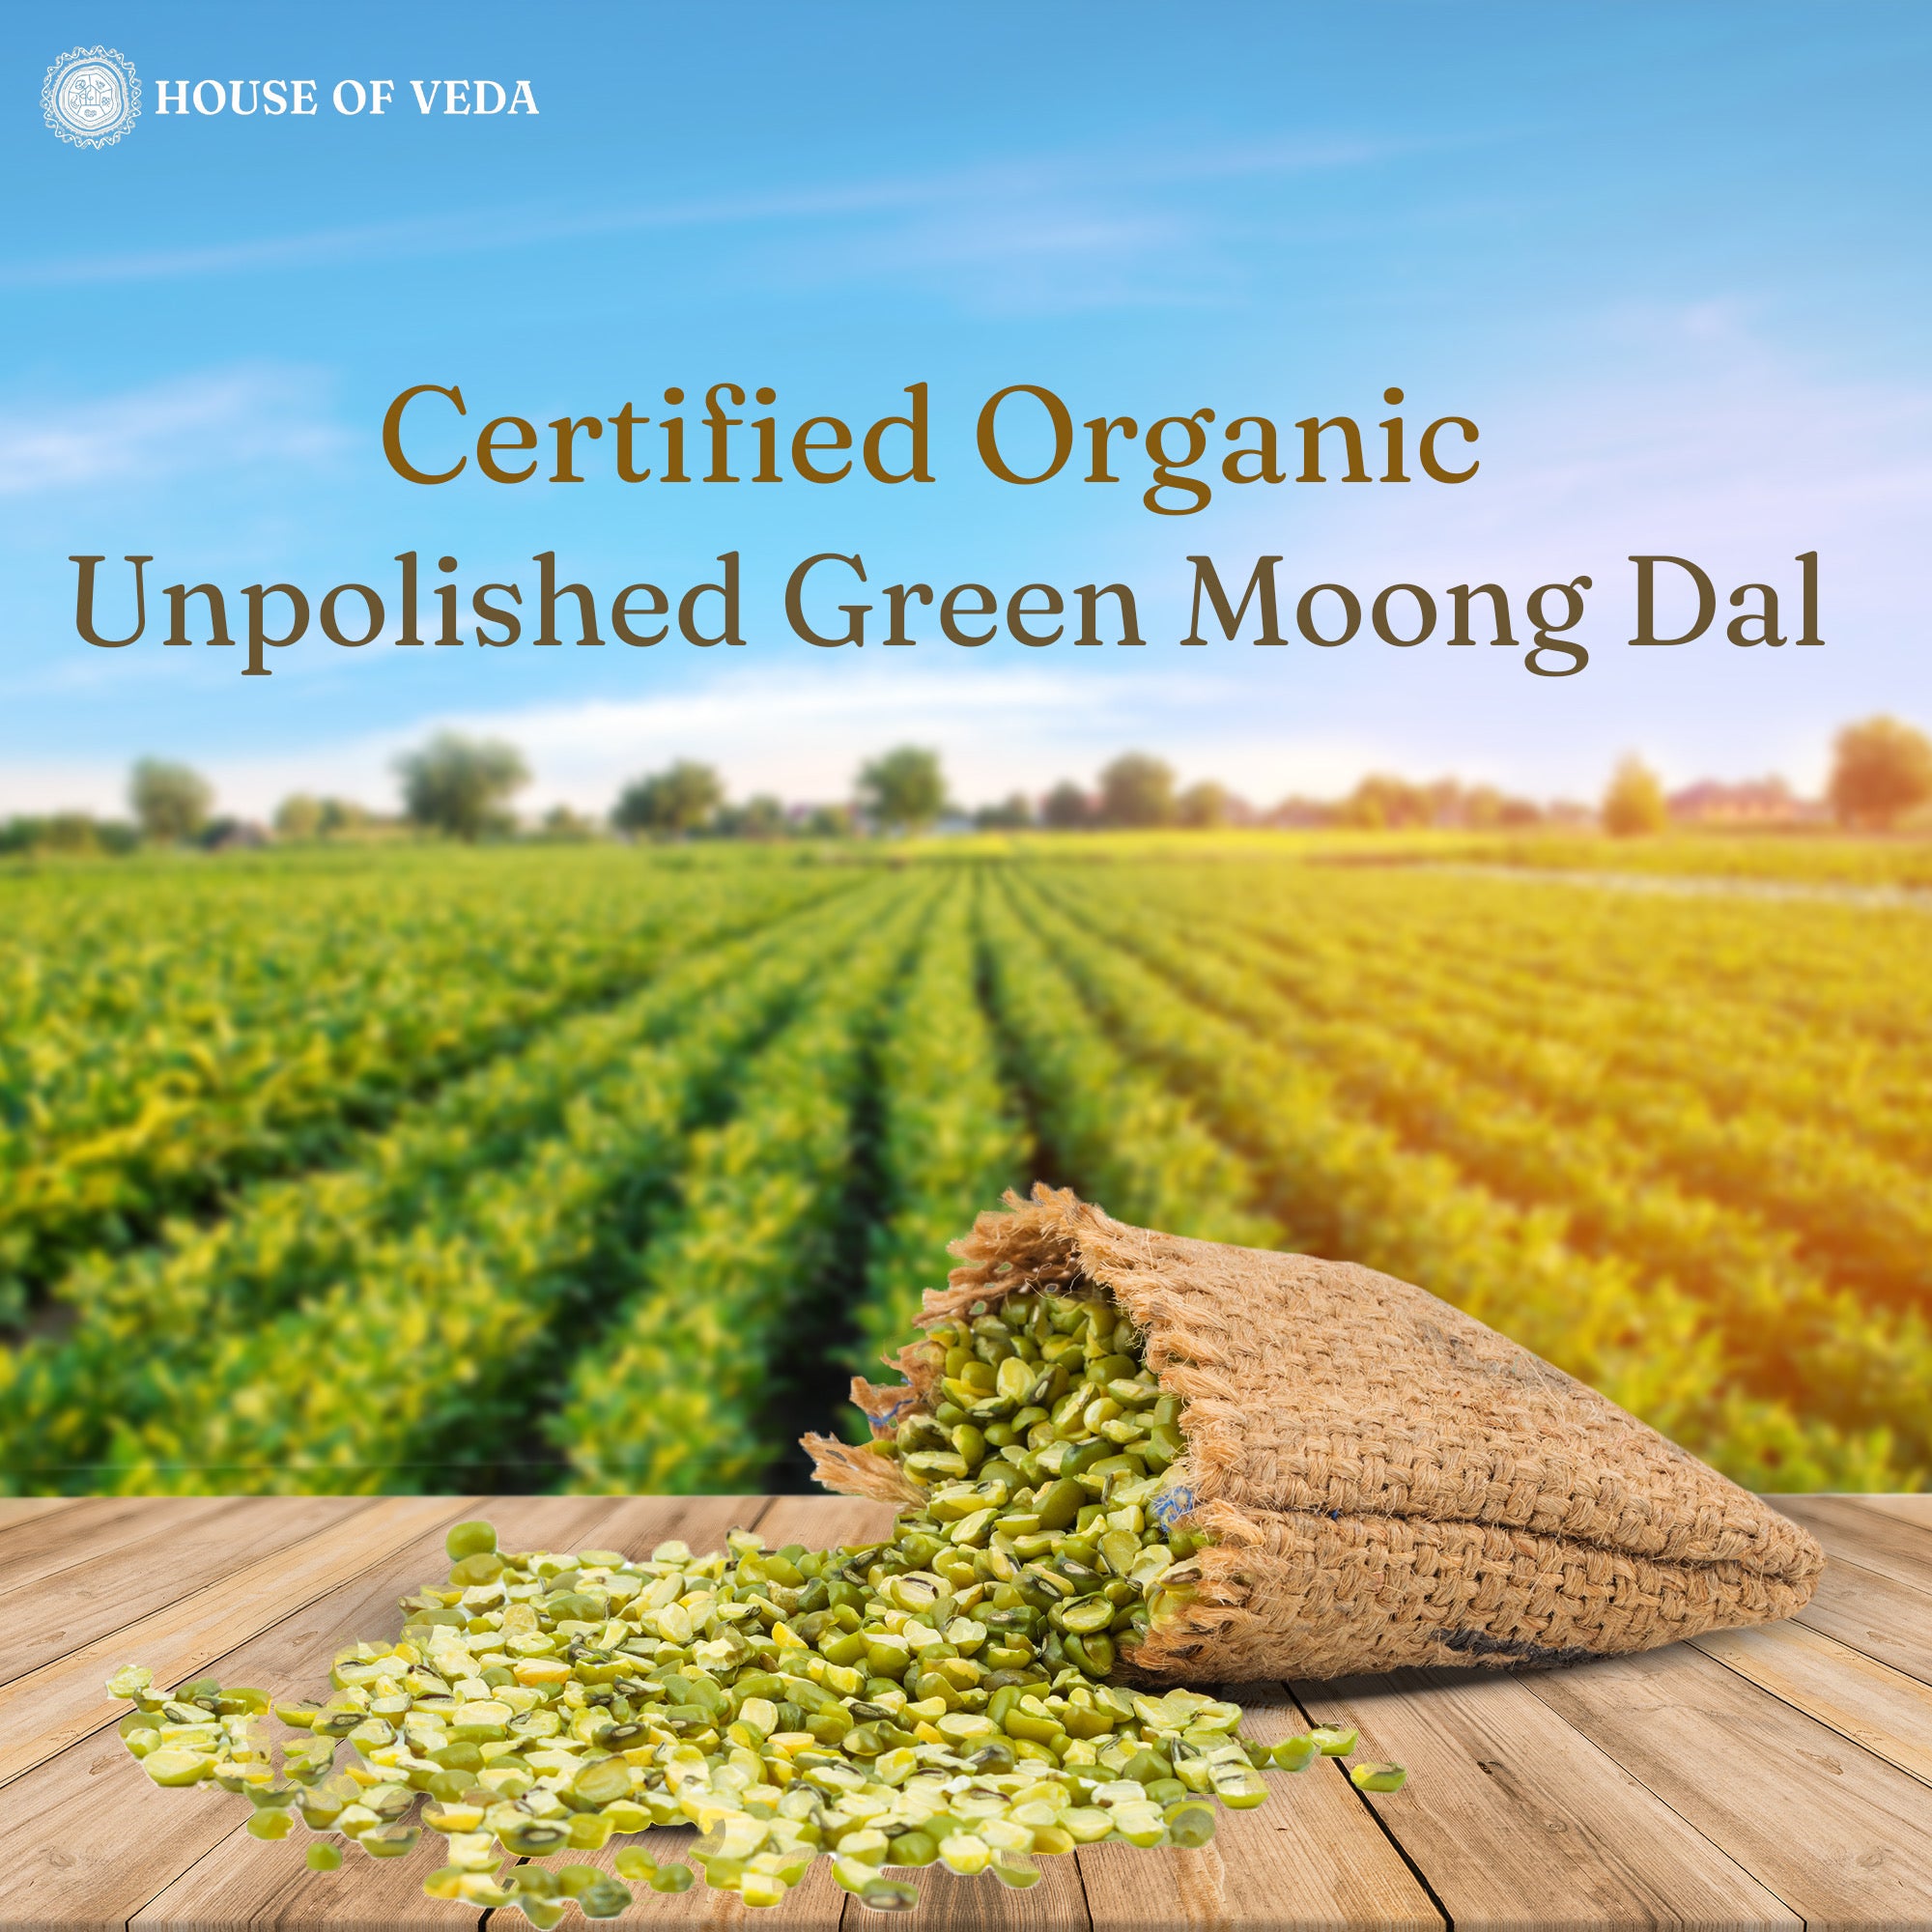 Organic Green Moong Dal 1kg